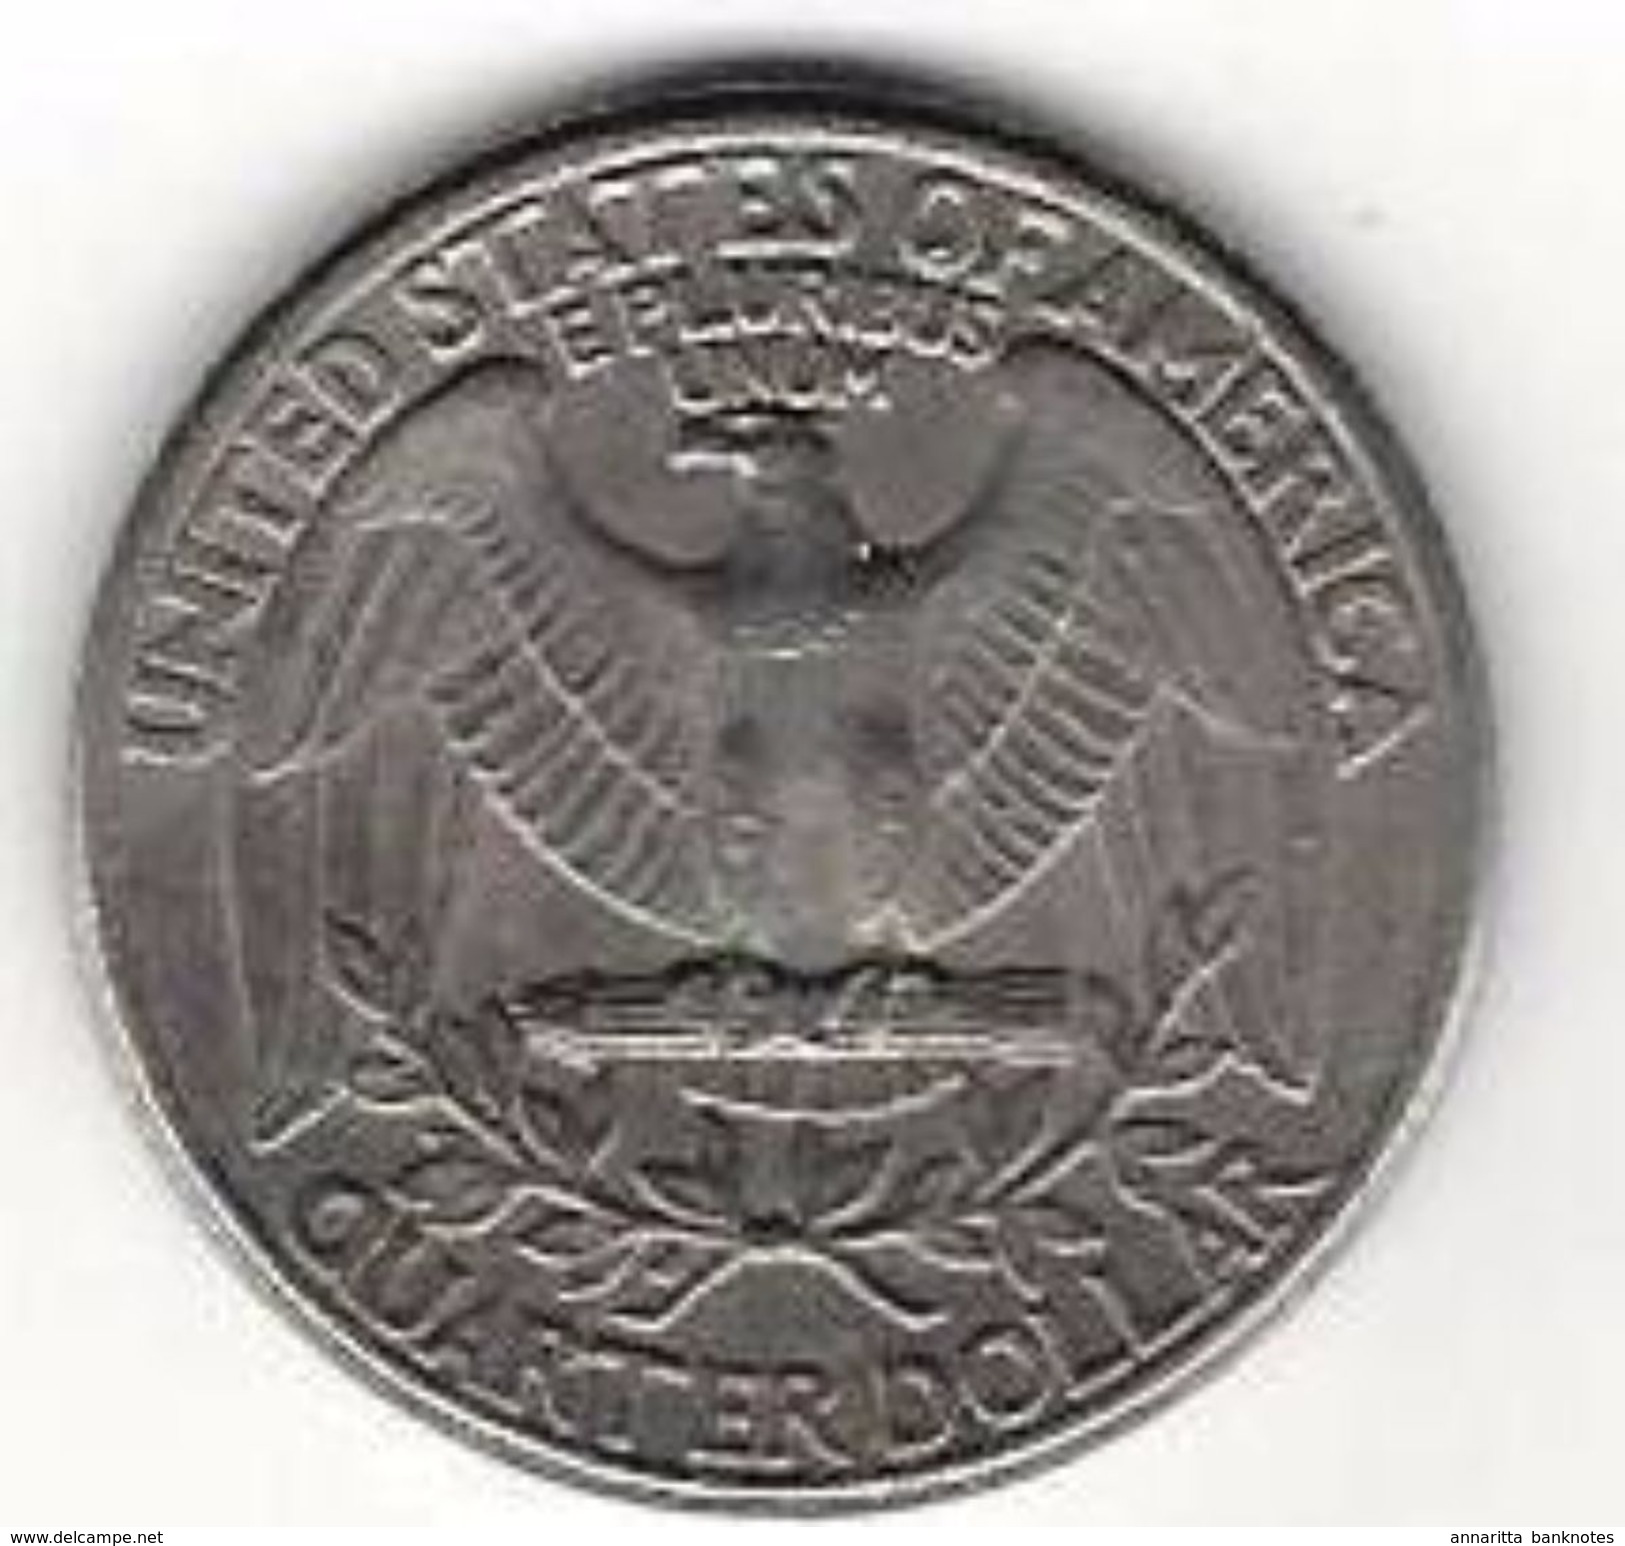 UNITED STATES 1/4 DOLLAR 1977 KM# A164a CIRC. WASHINGTON QUARTER [US-A0164a-1977] - 1932-1998: Washington